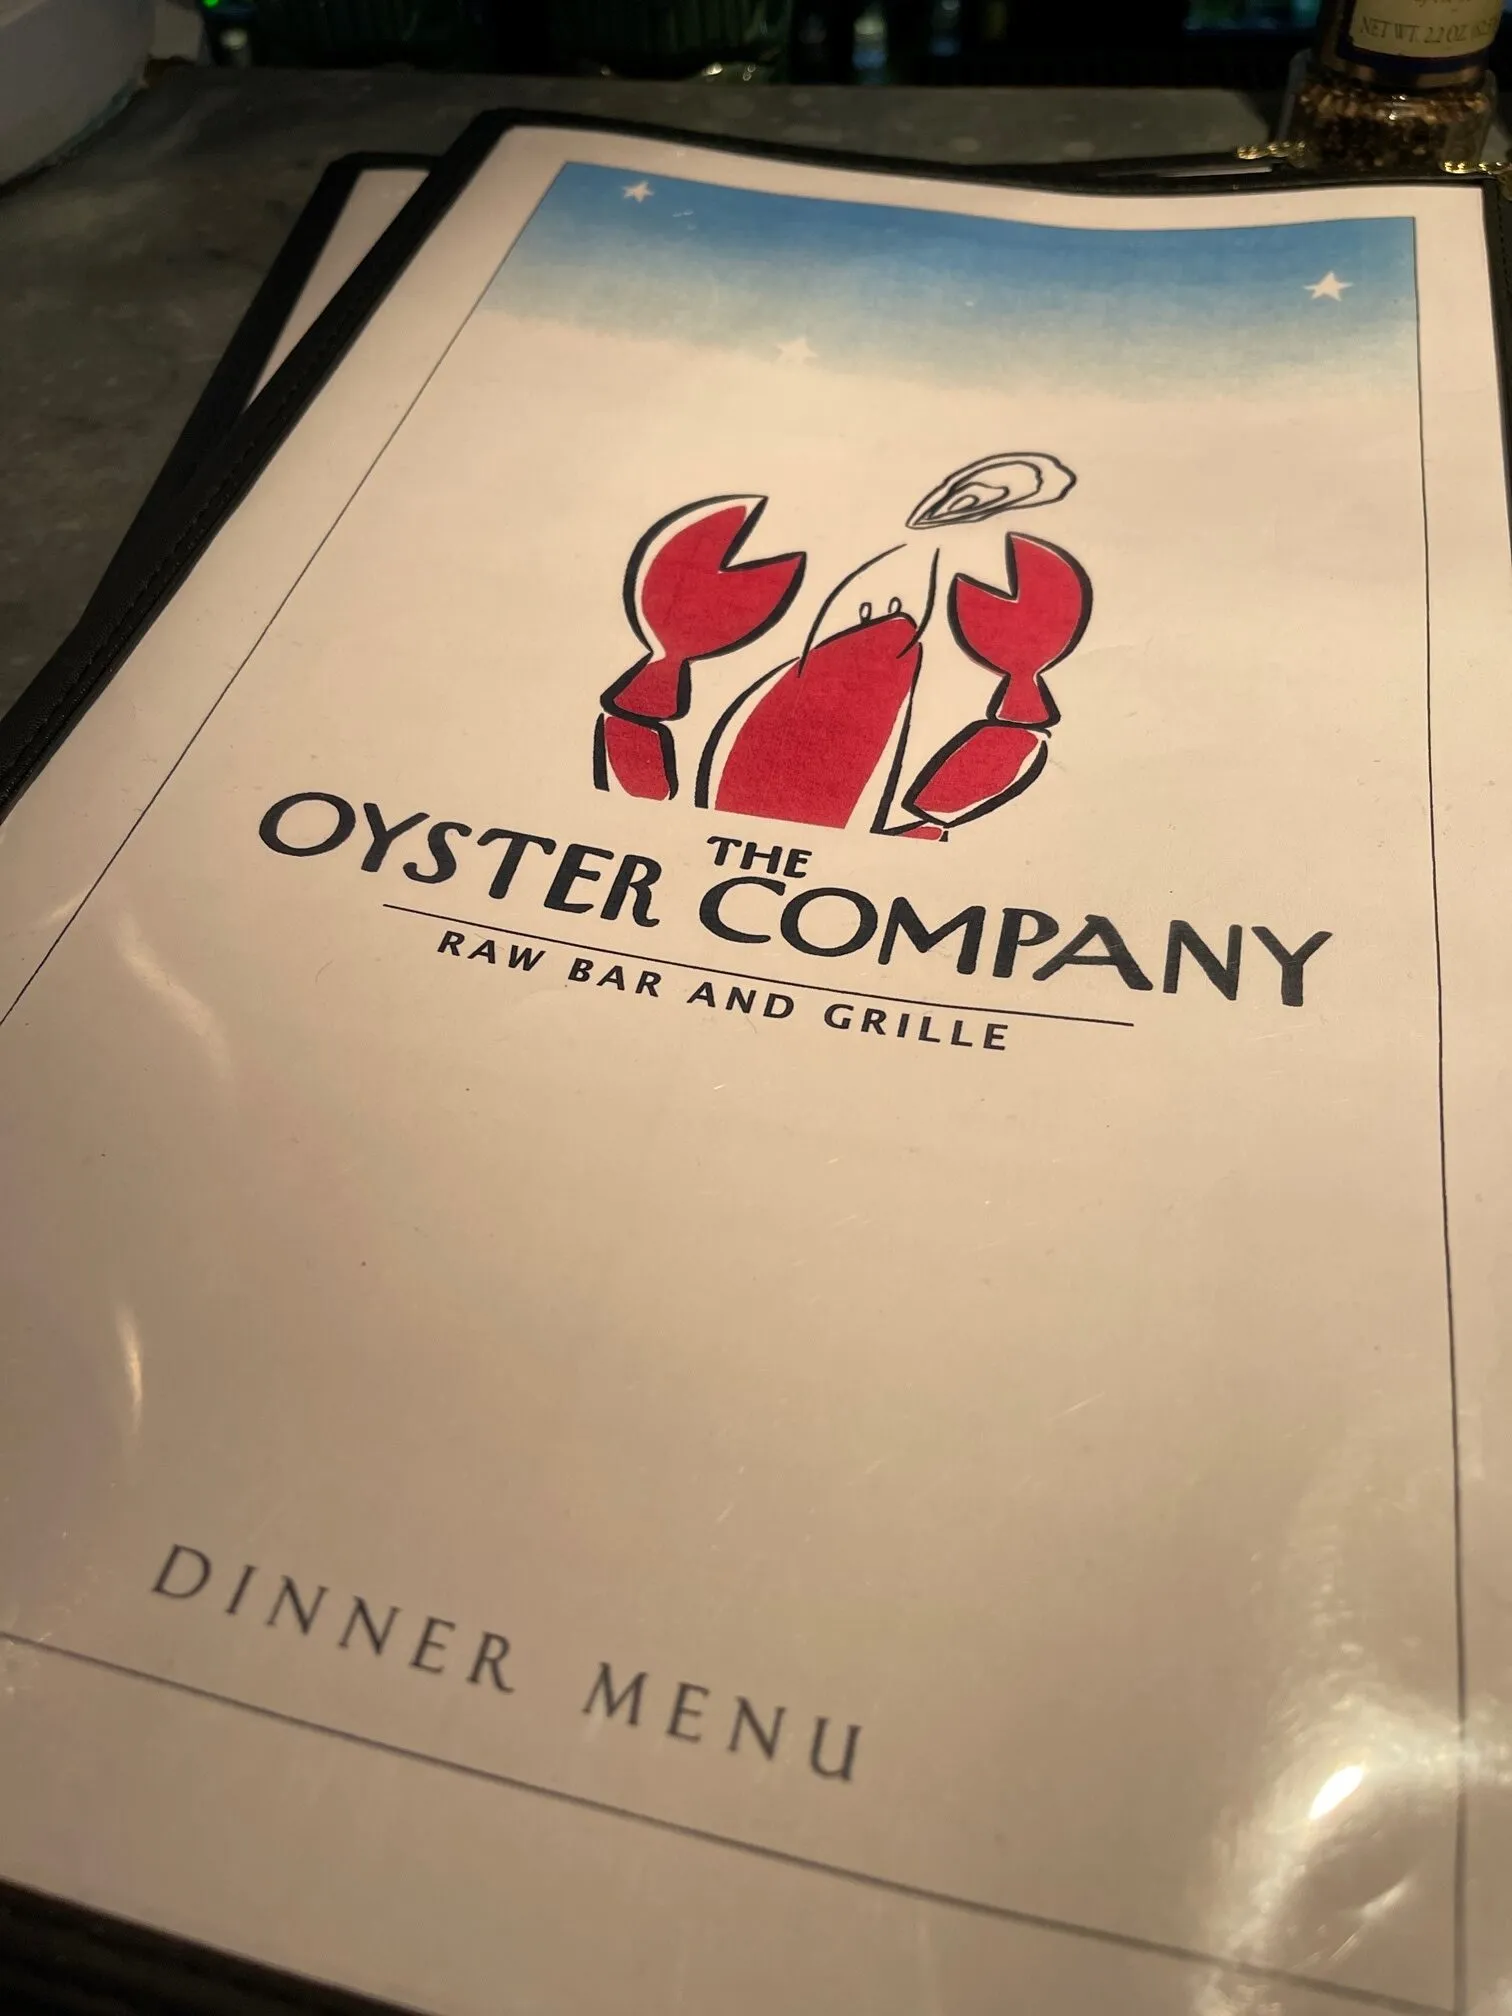 The Oyster Company menu